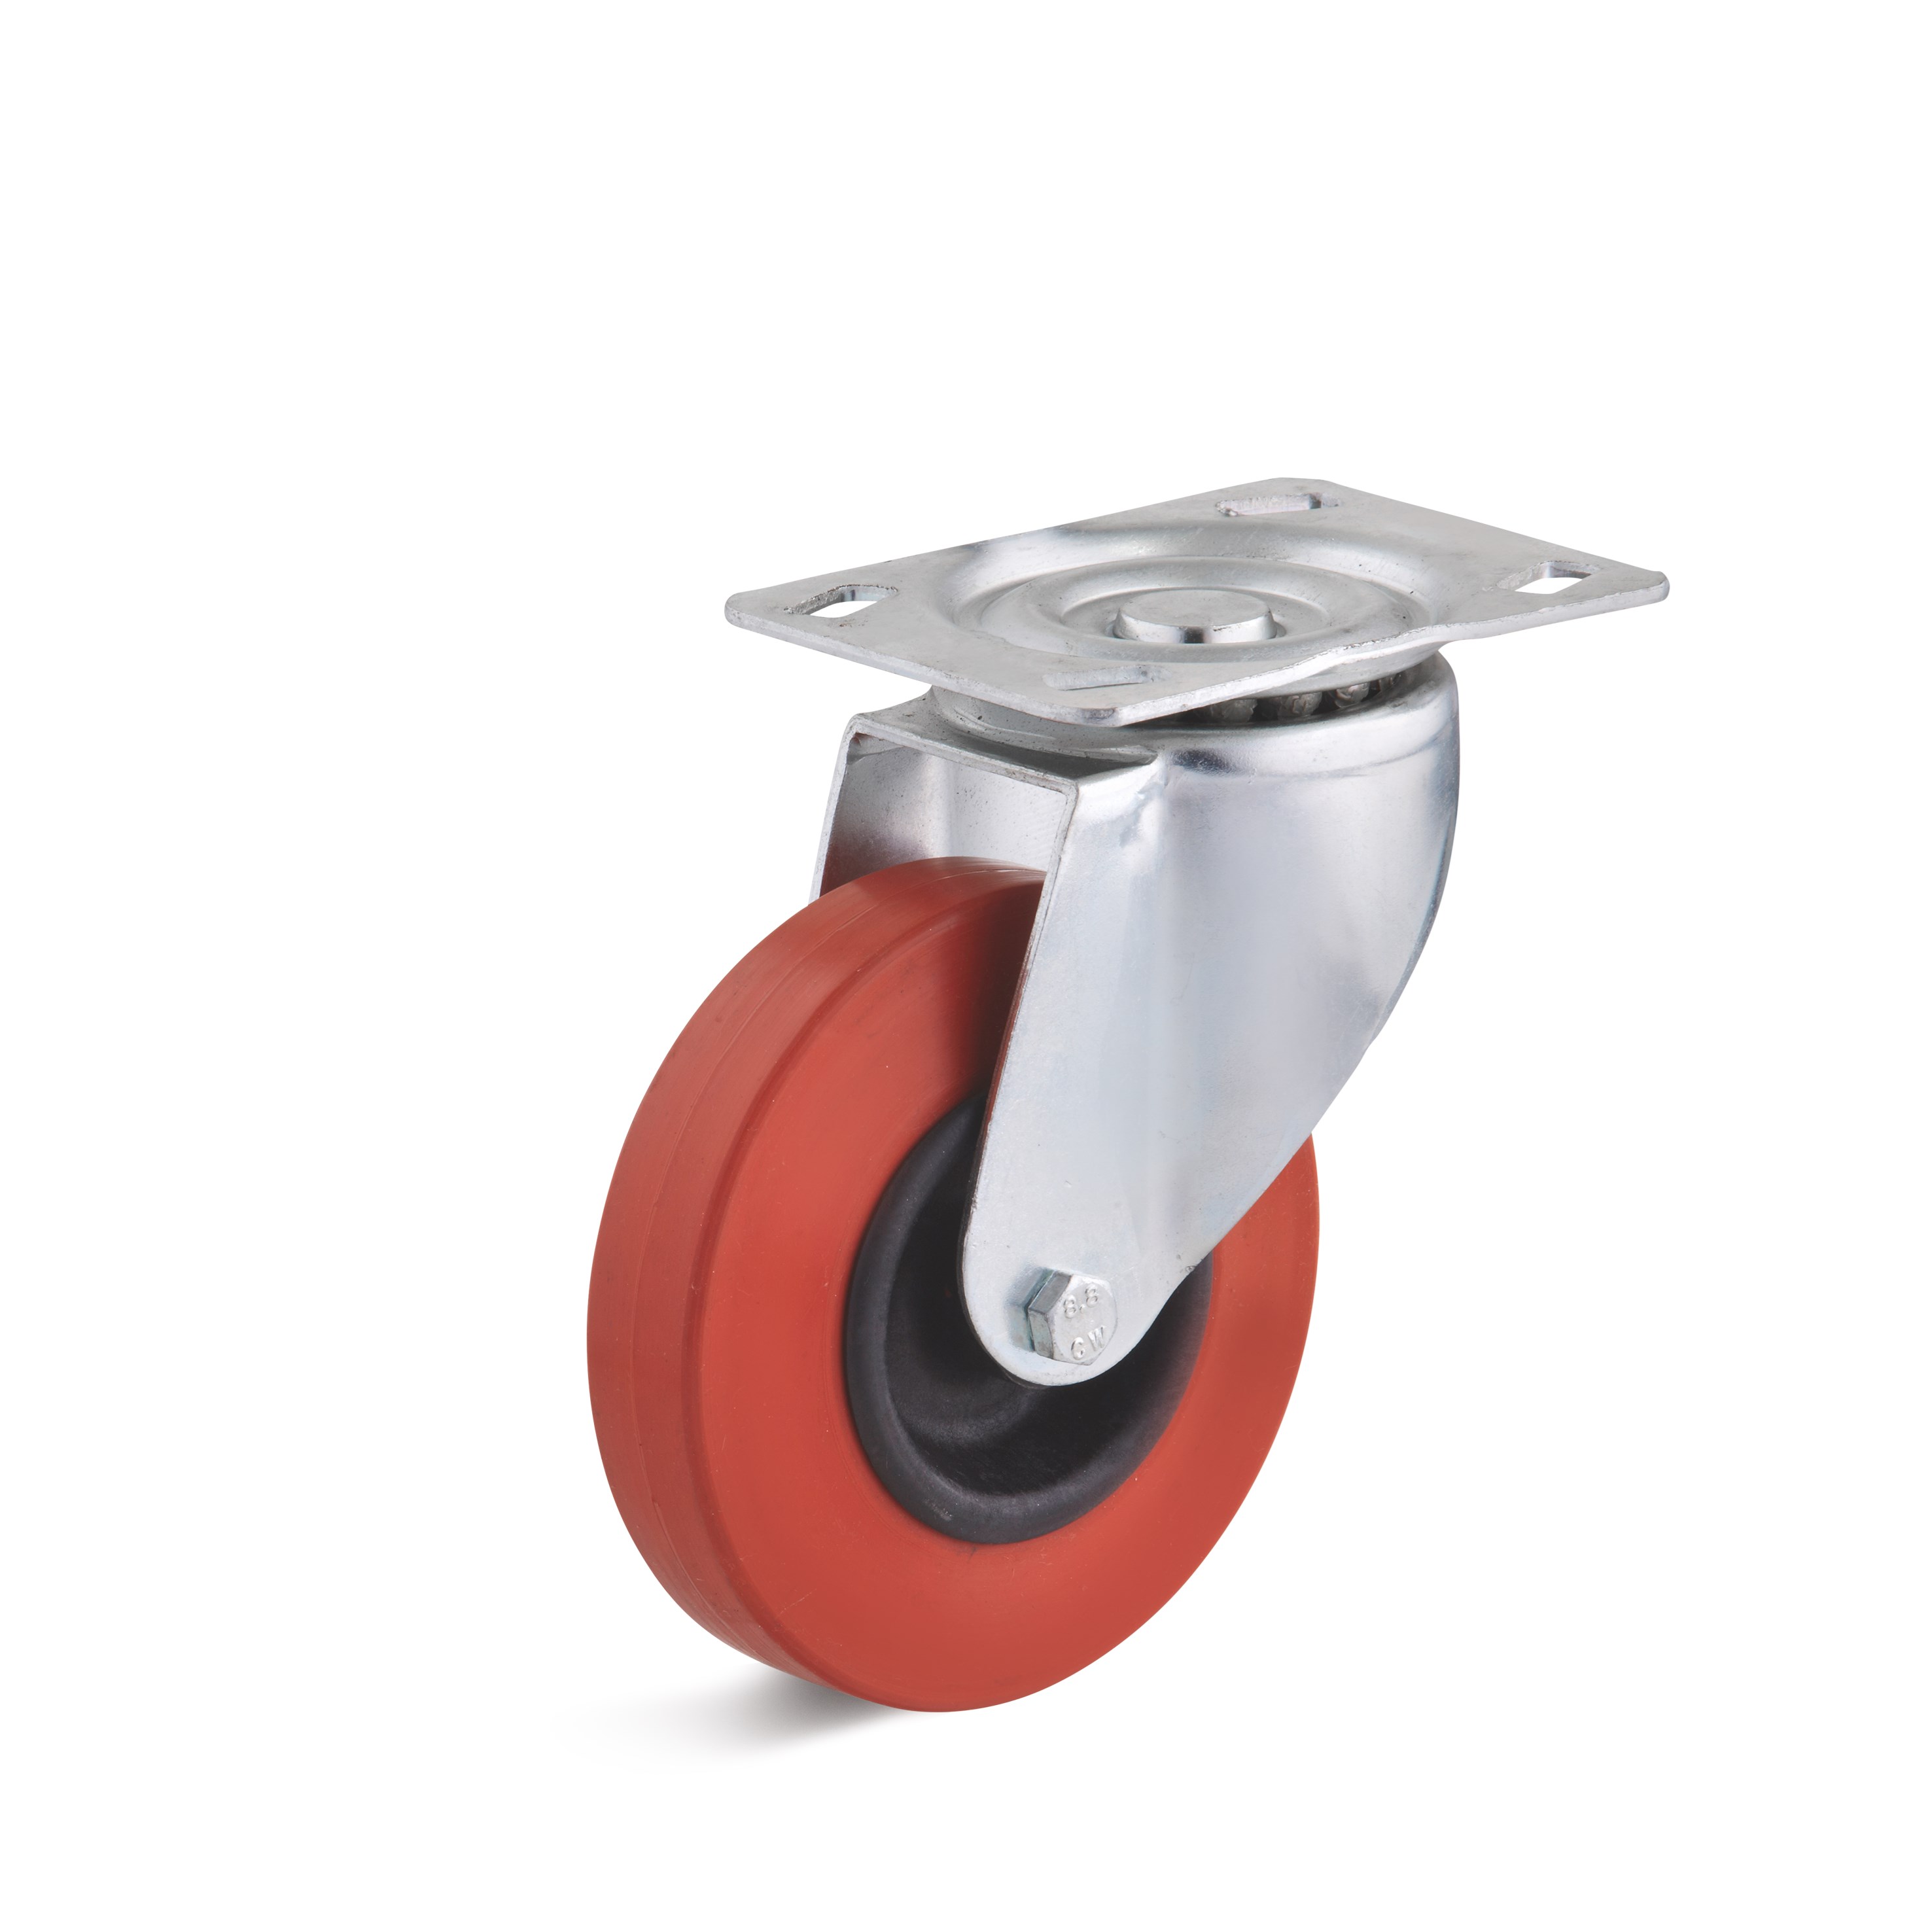 Swivel castor with heat-resistant rubber wheel